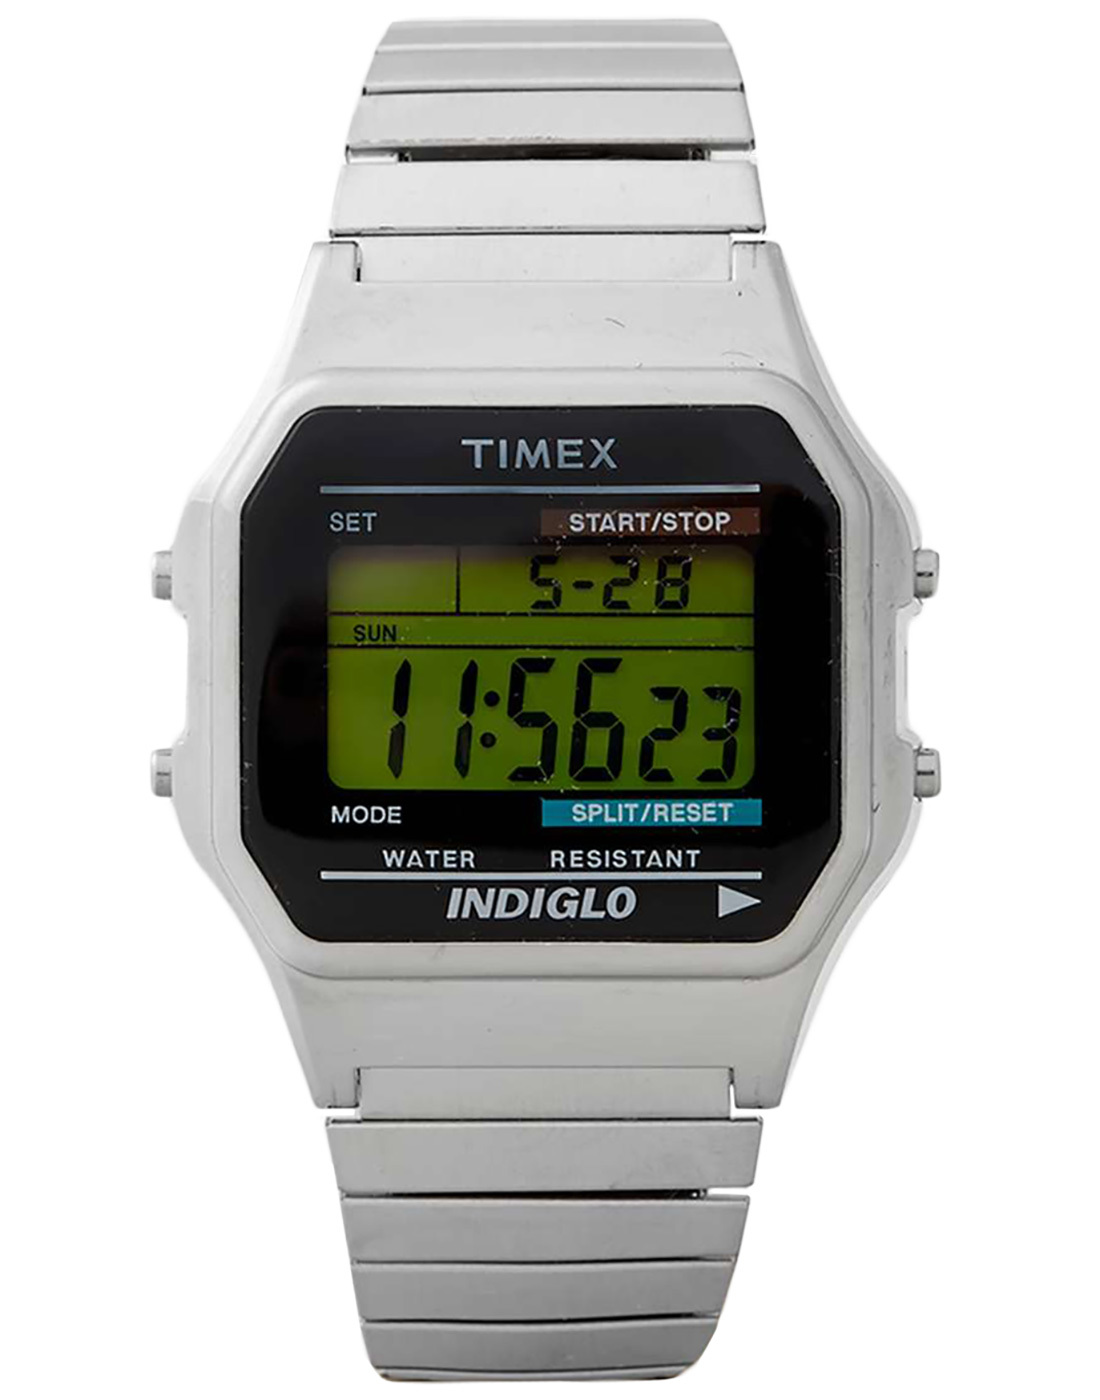 TIMEX 80 Retro Eighties Retro Digital Watch 